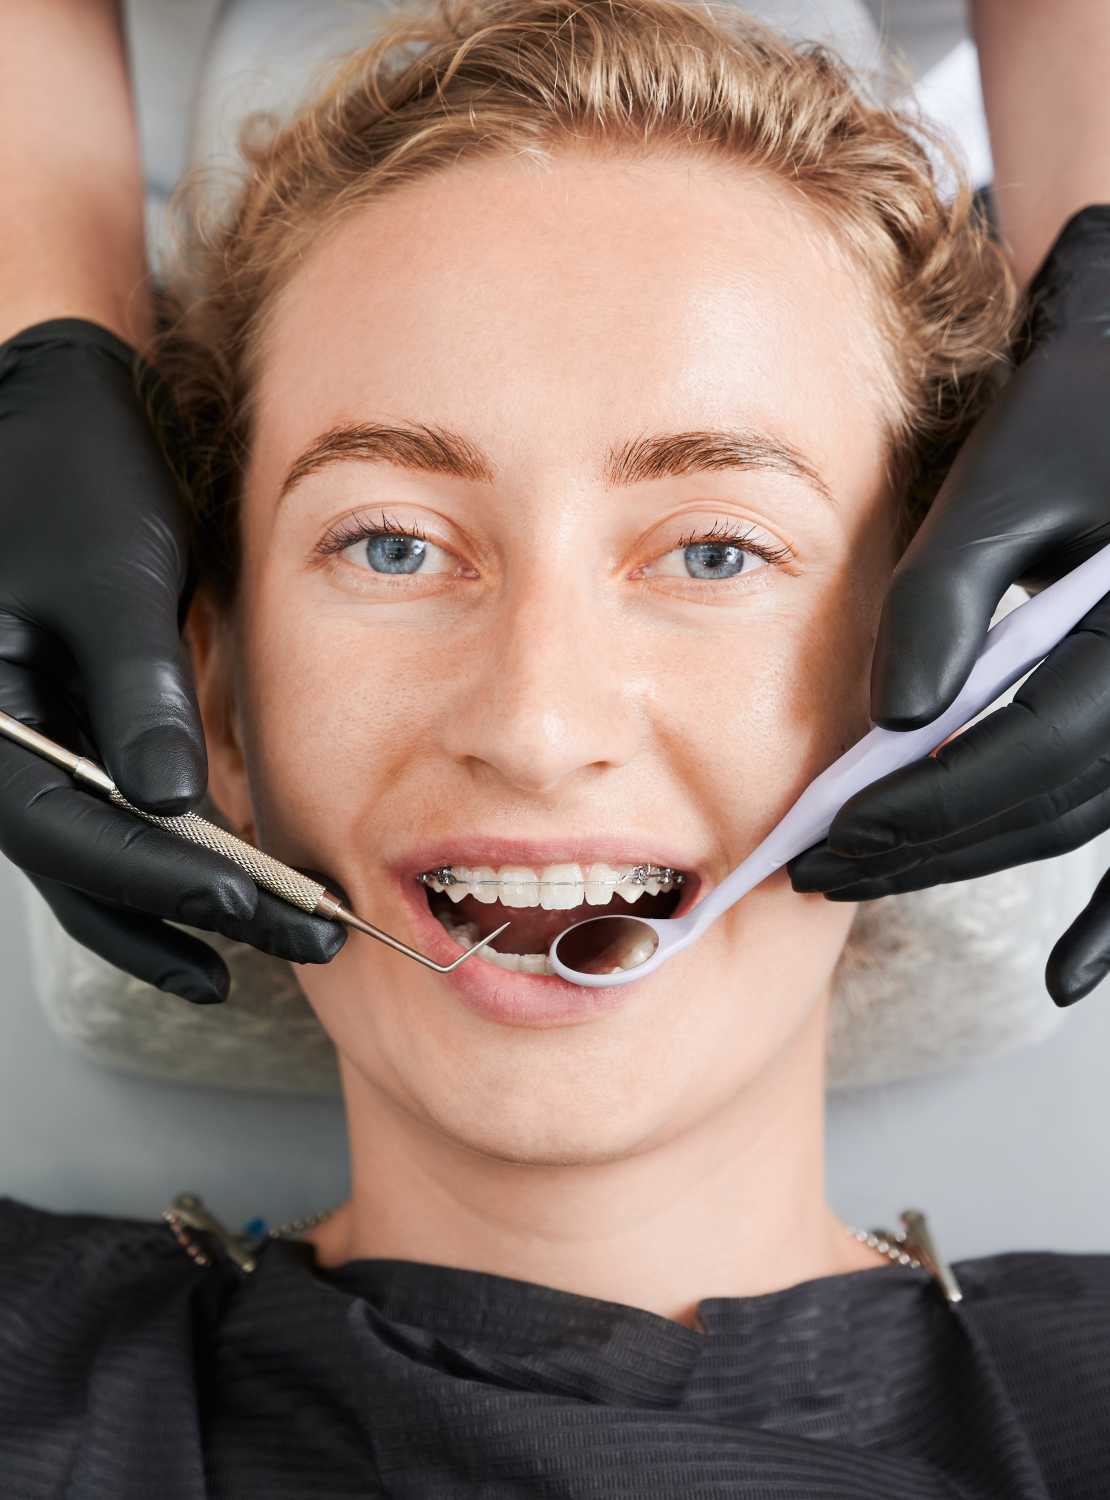 dentist-examining-woman-teeth-with-braces (1)